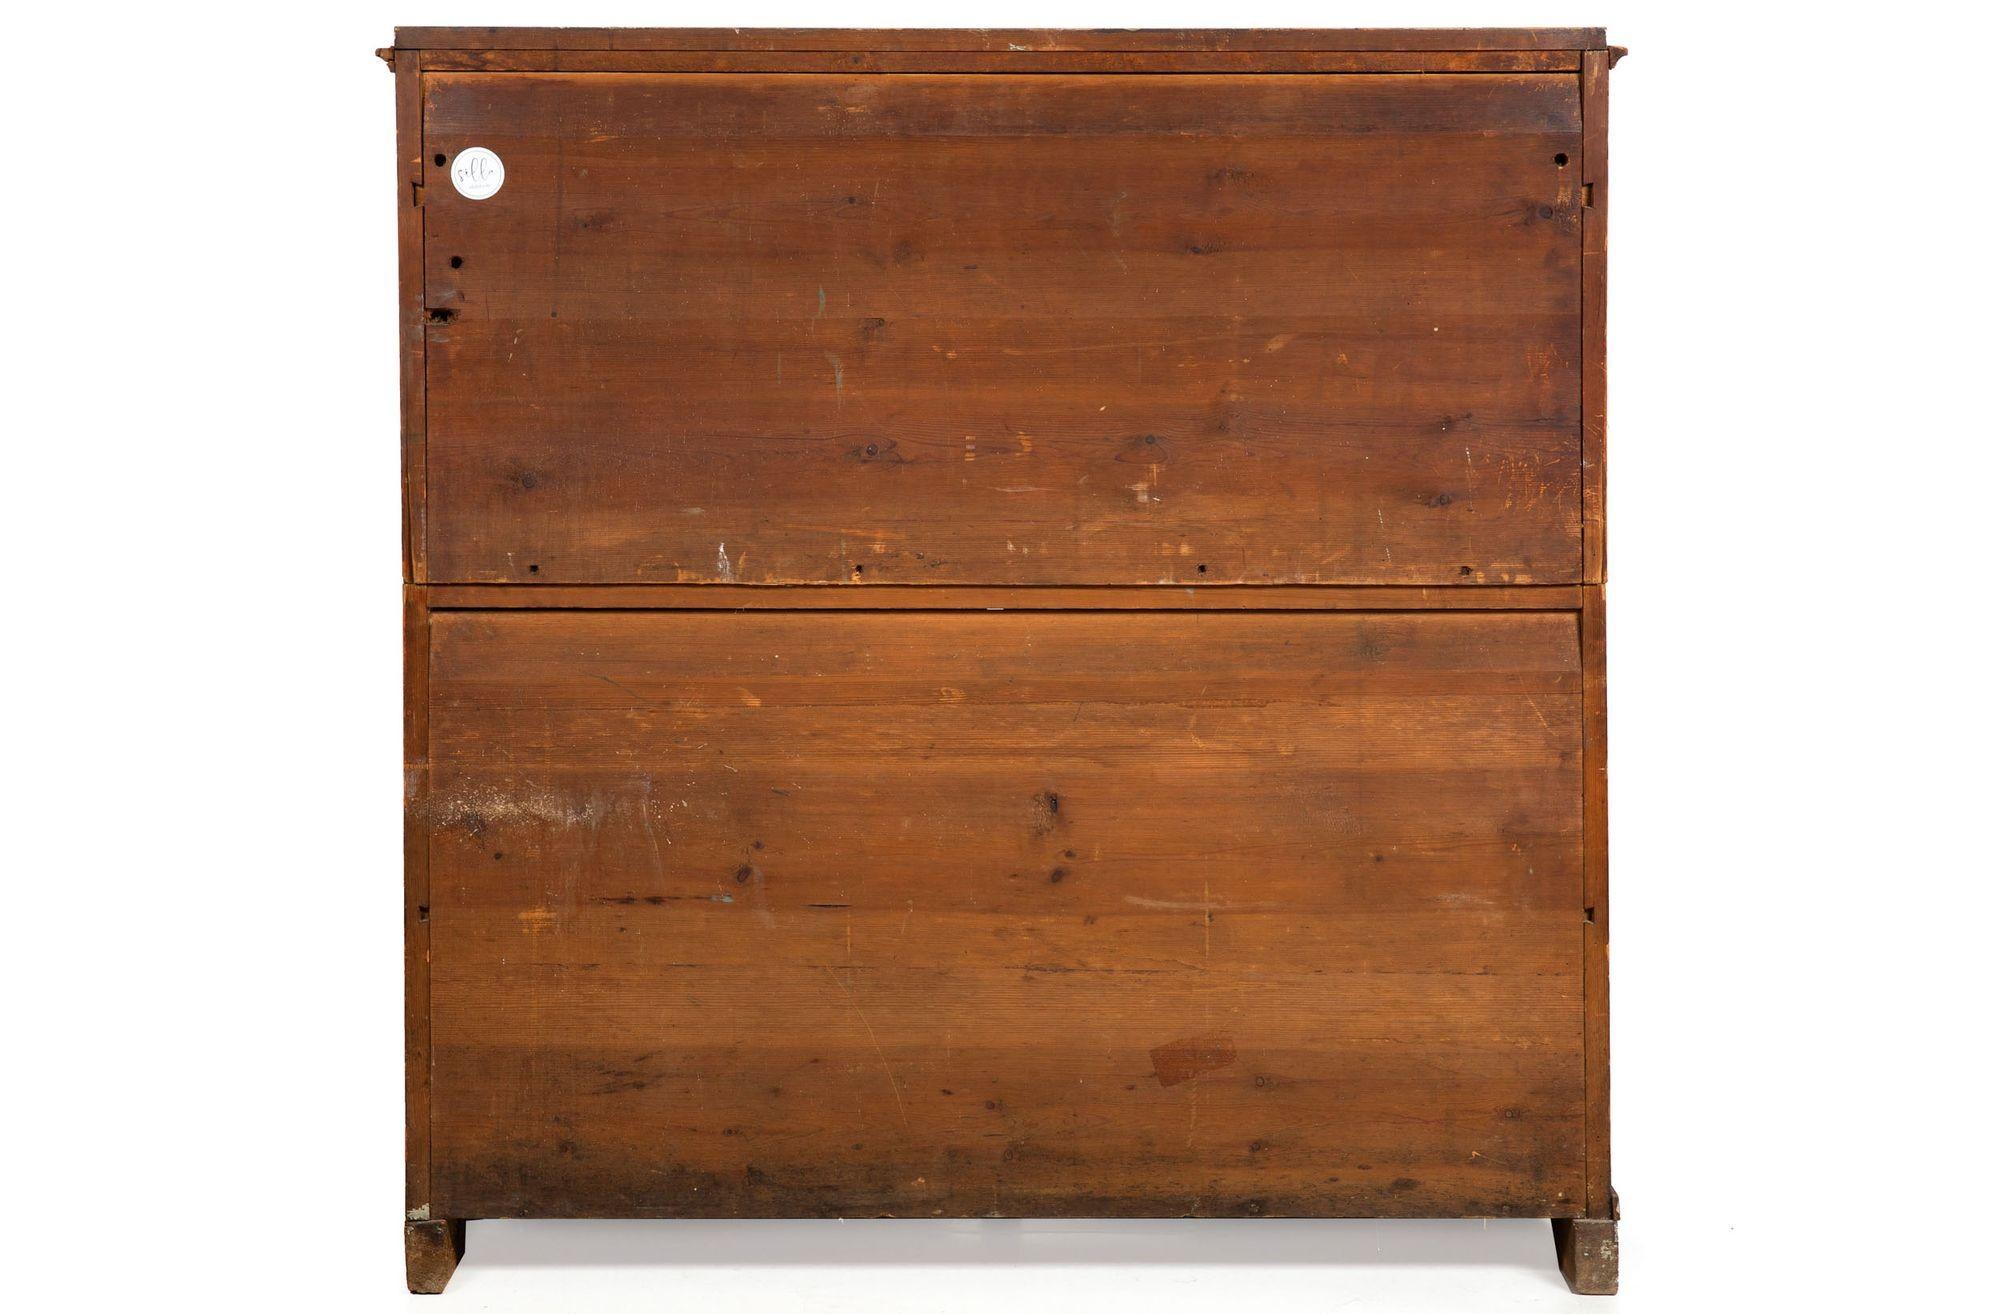 Pine Gustavian Antique Painted Desk on Cabinet, Swedish or Danish circa 1820-40